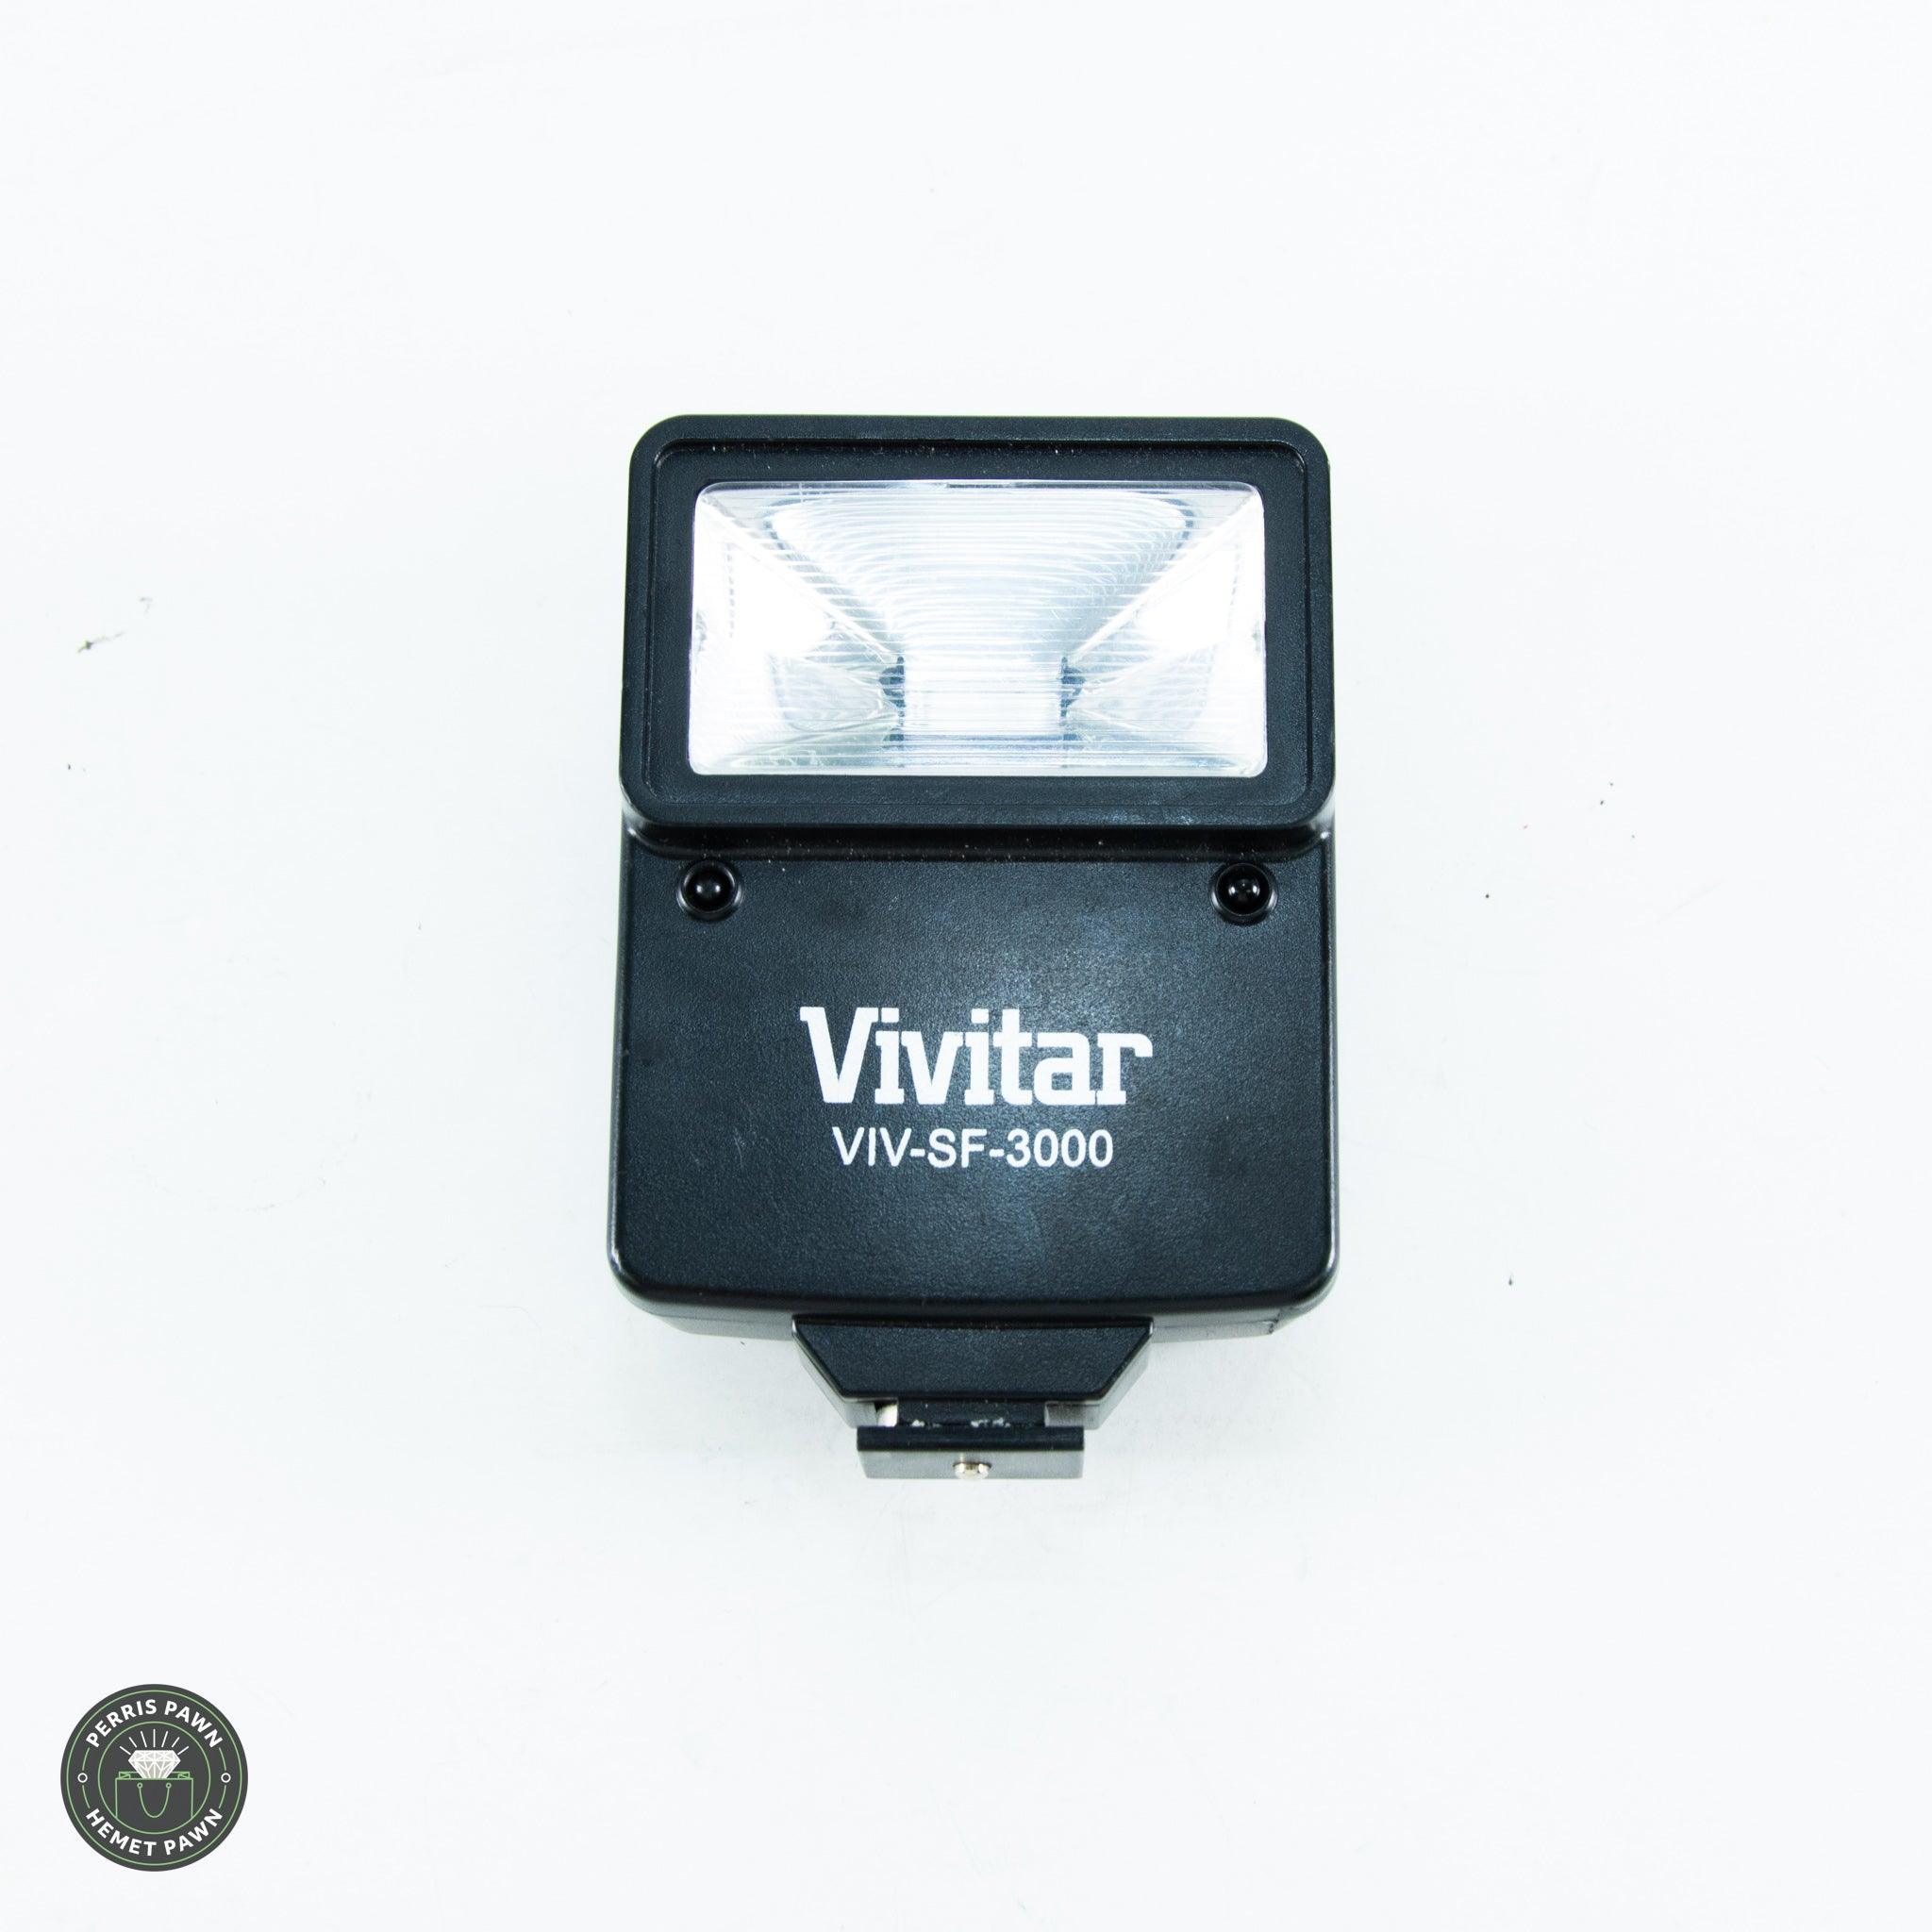 Vivitar Viv-SF-3000 Electronic Shoe Mount Flash - ipawnishop.com